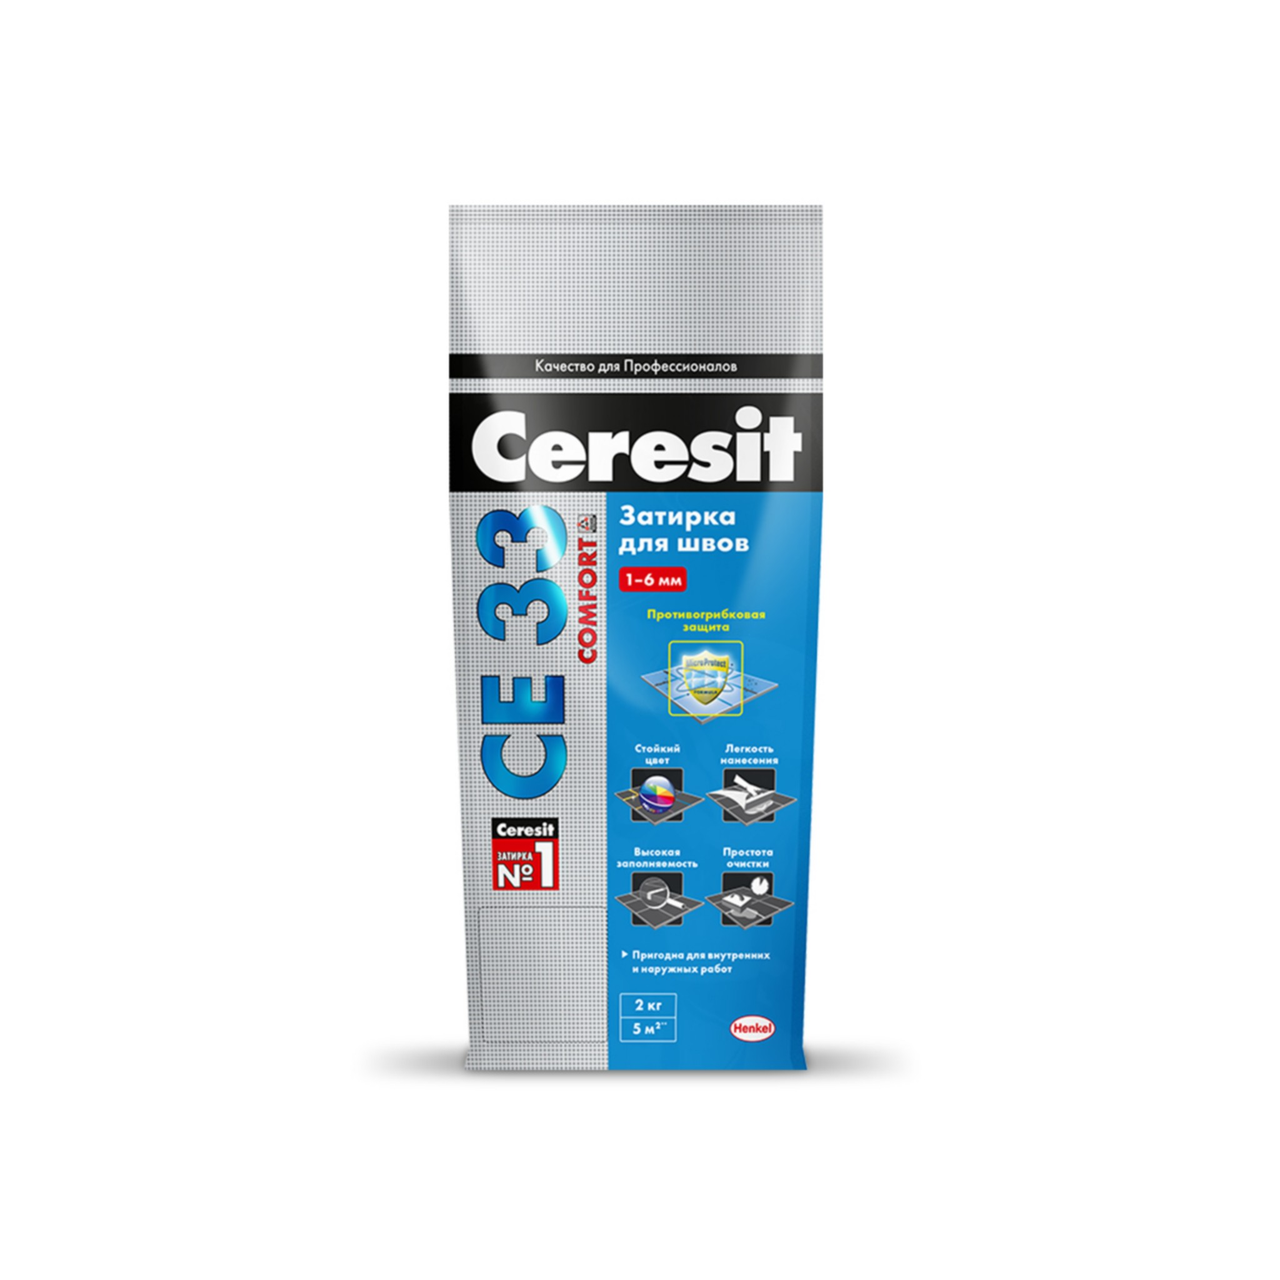 Ceresit  CE 33 Comfort затирка для узких швов, цвет: Багама (Bahama), 2 кг